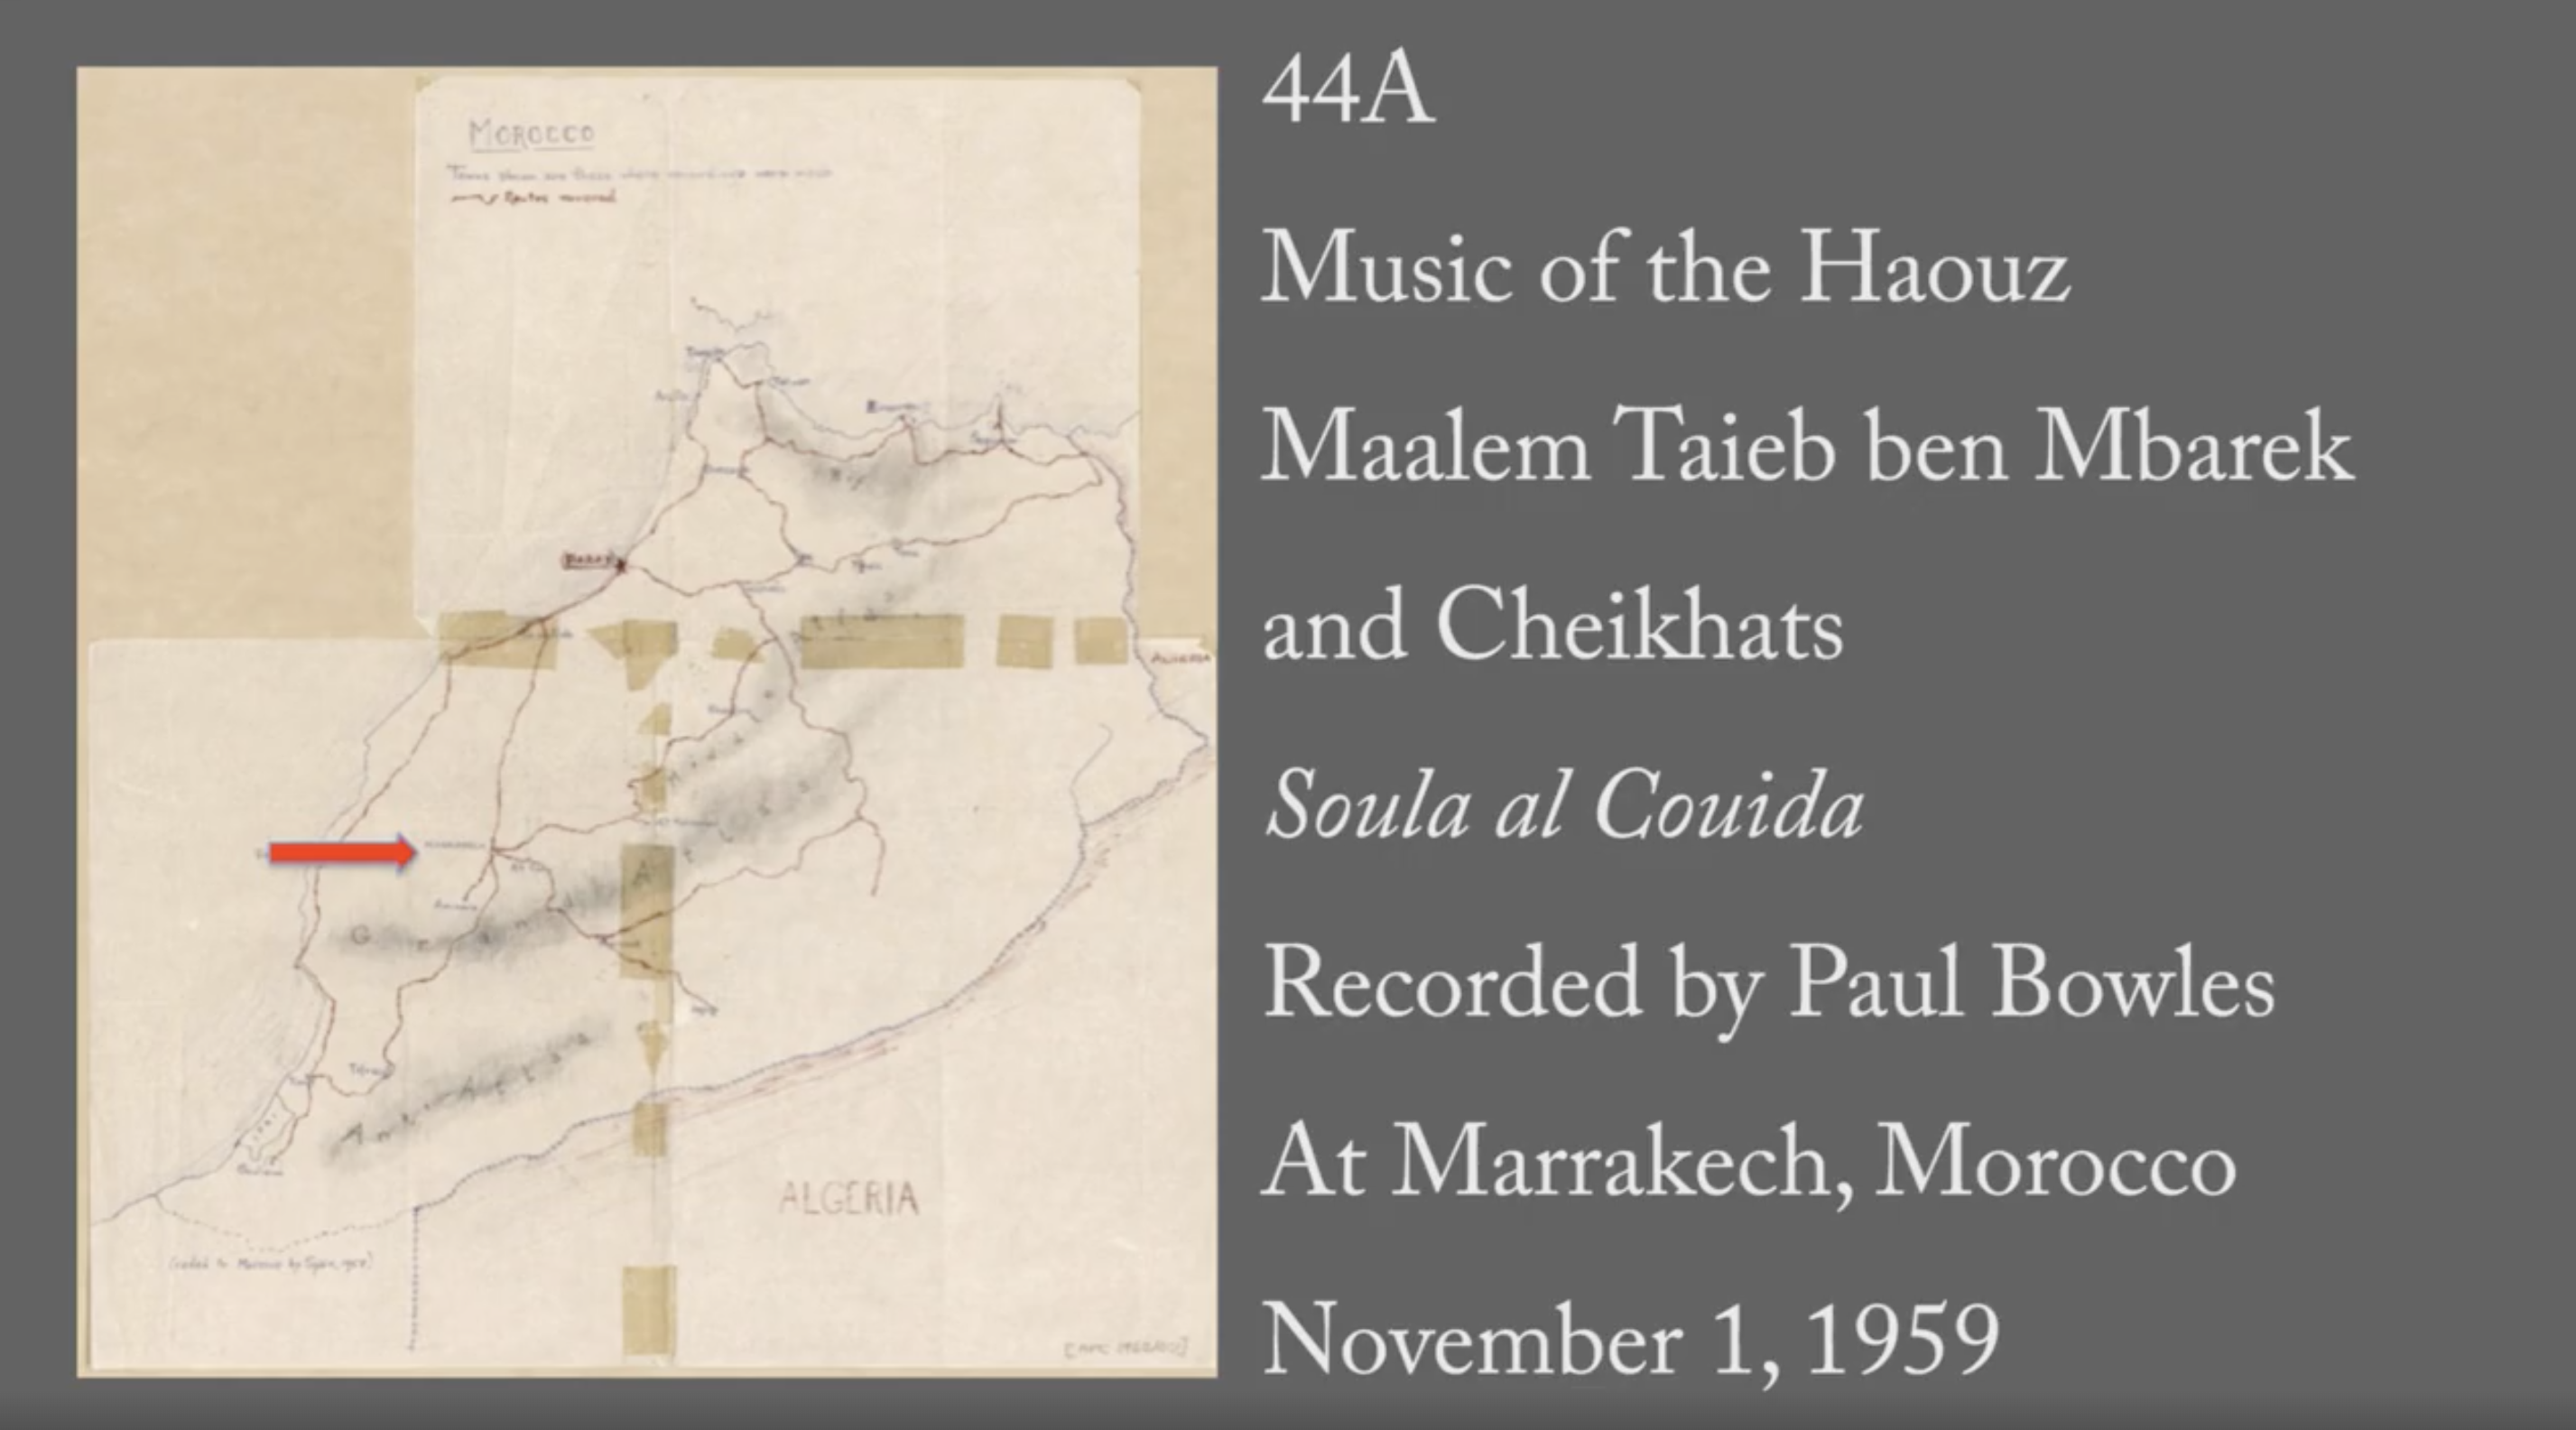  Maalem Taieb ben Mbarek - 44A: "Soula al Couida" (Music of the Haouz )